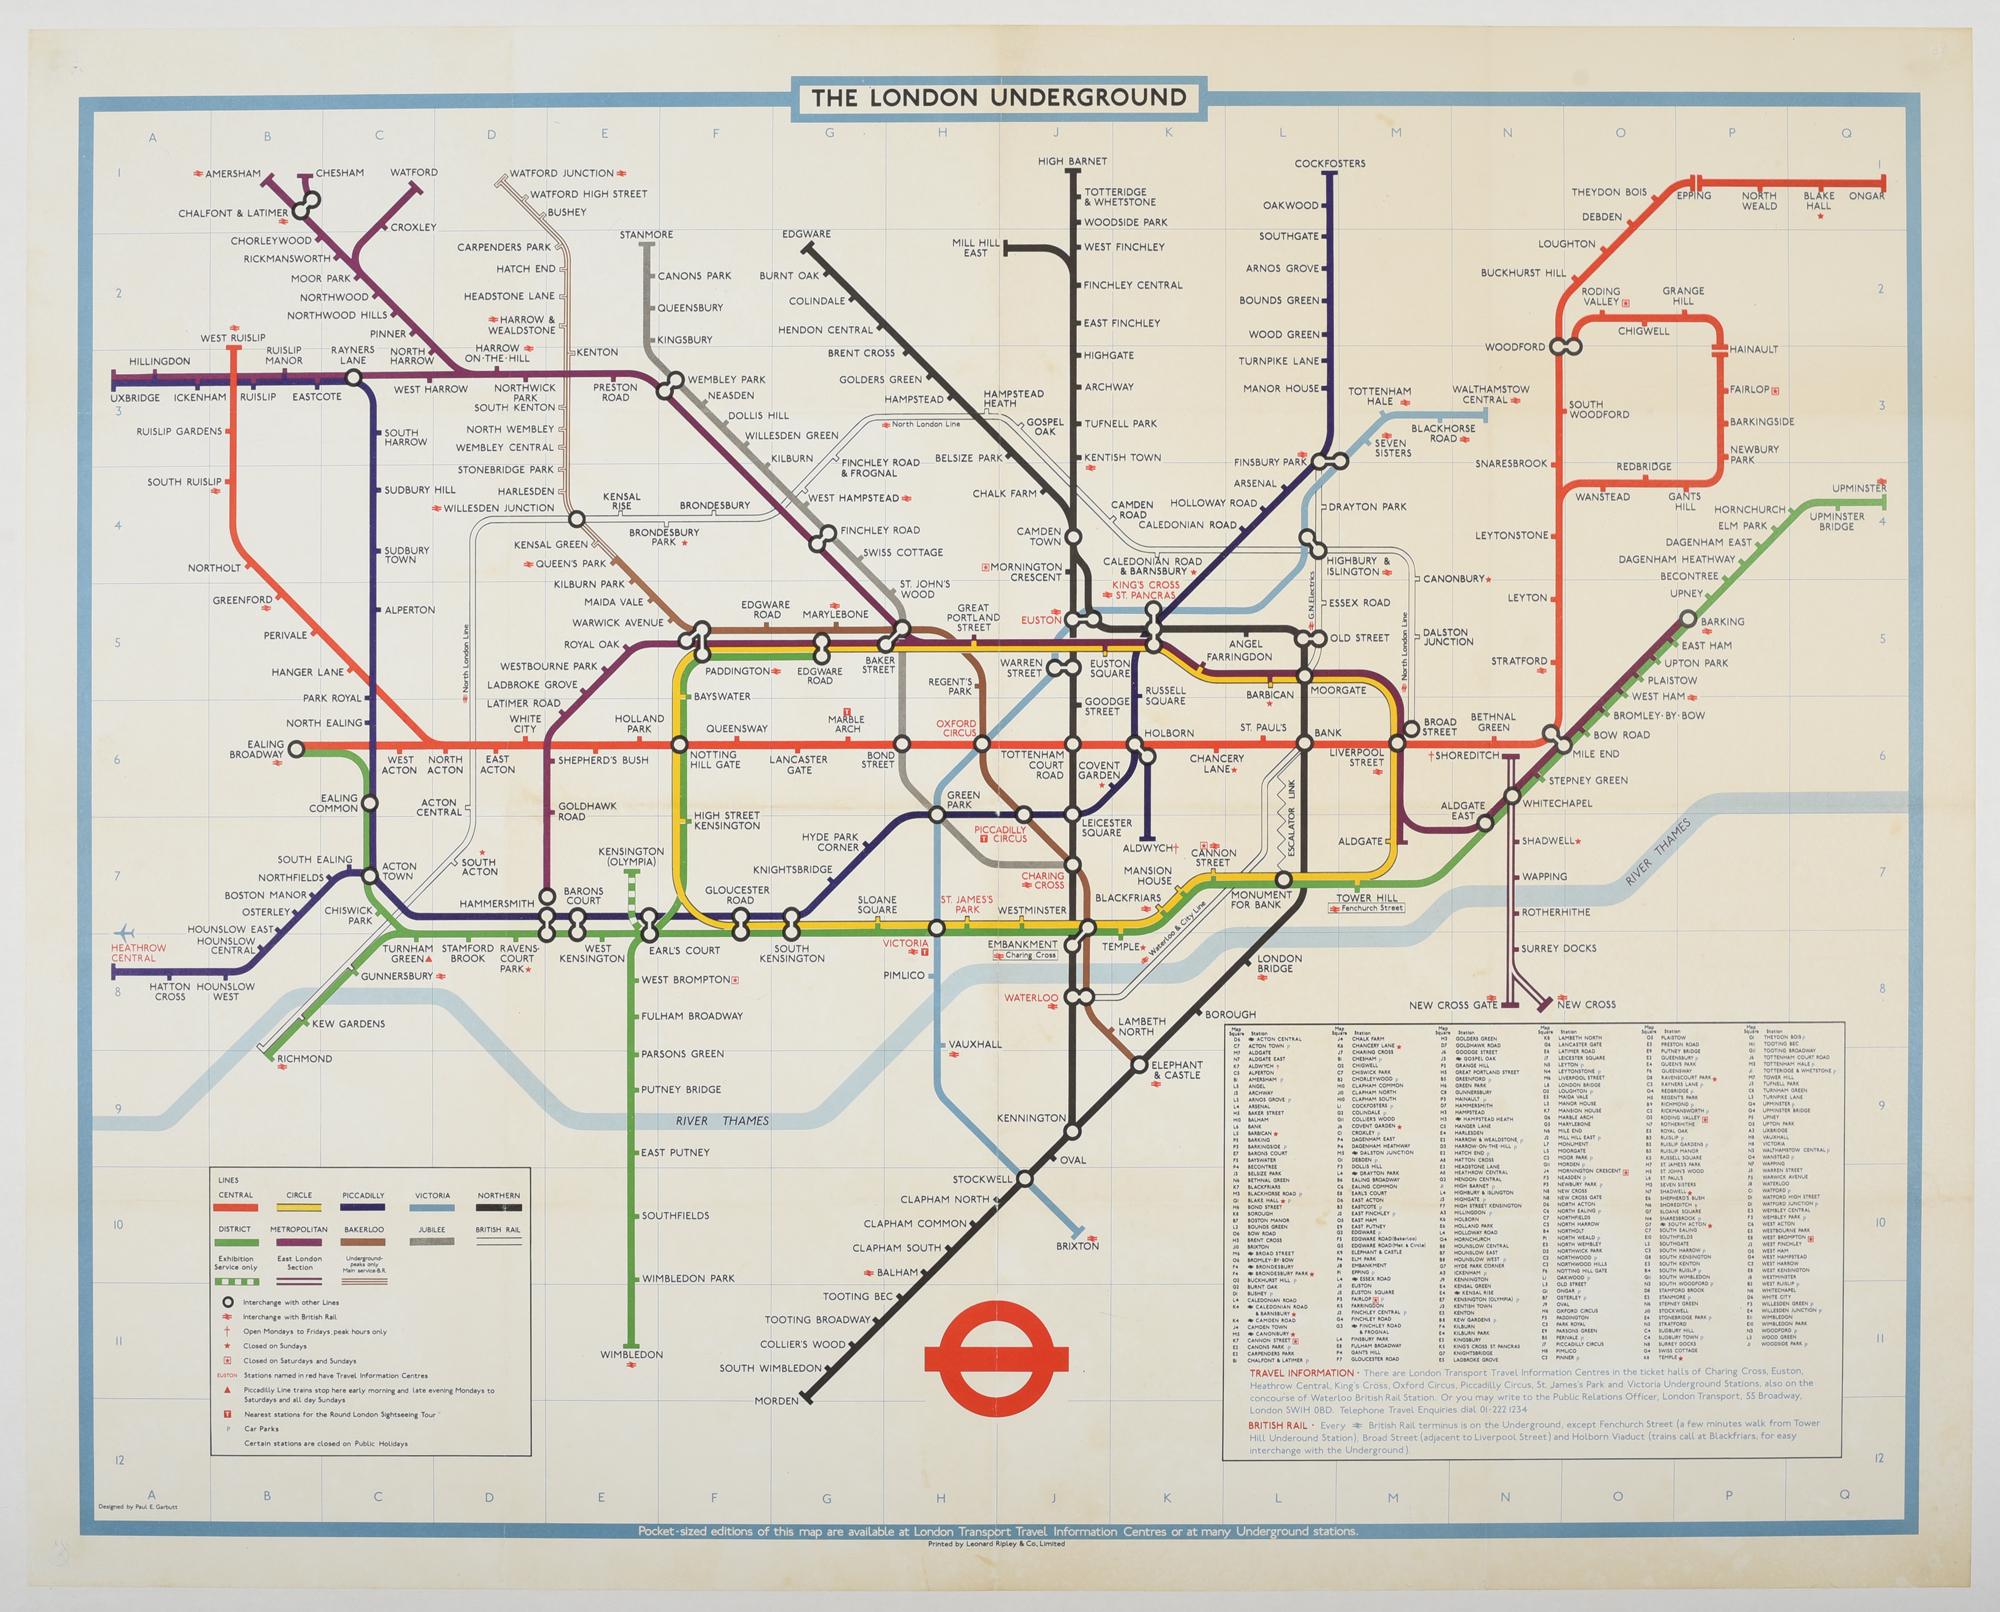 Paul E. Garbutt Print - Original Vintage The London Underground Poster London Transport Tube Map Railway